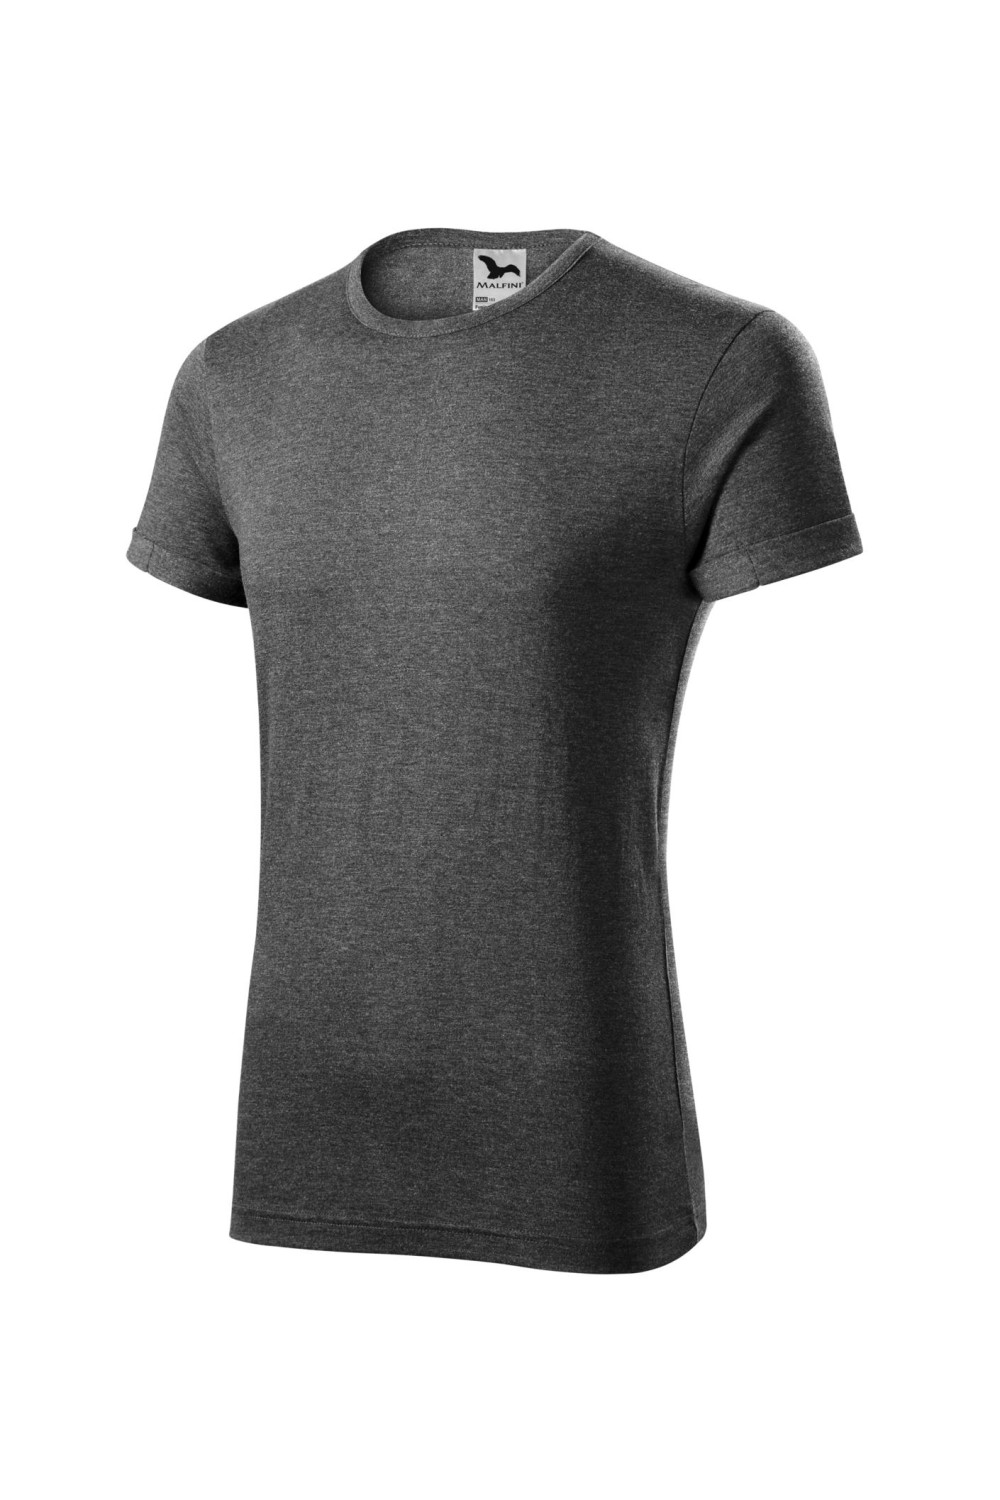 Koszulka męska melanżowa FUSION 163 koszulki / T-shirt czarny melanż M1